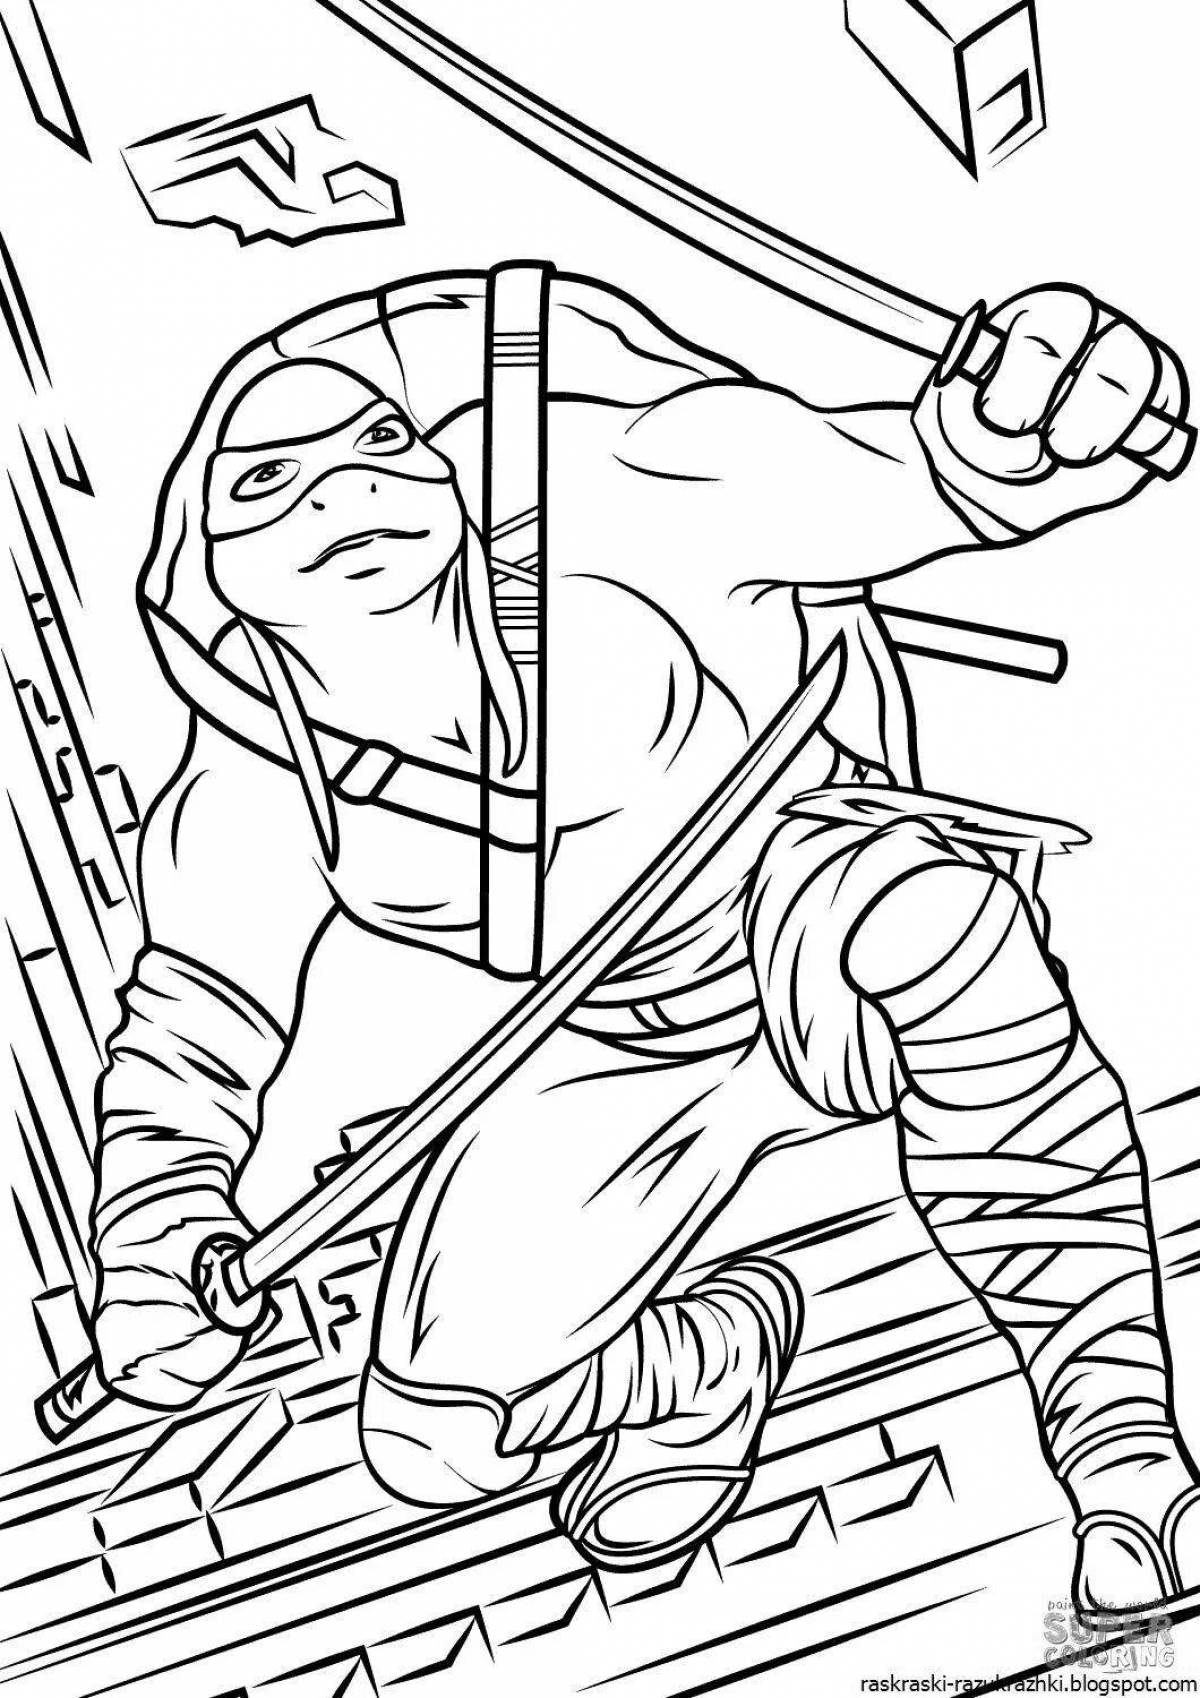 Gorgeous Teenage Mutant Ninja Turtles coloring page